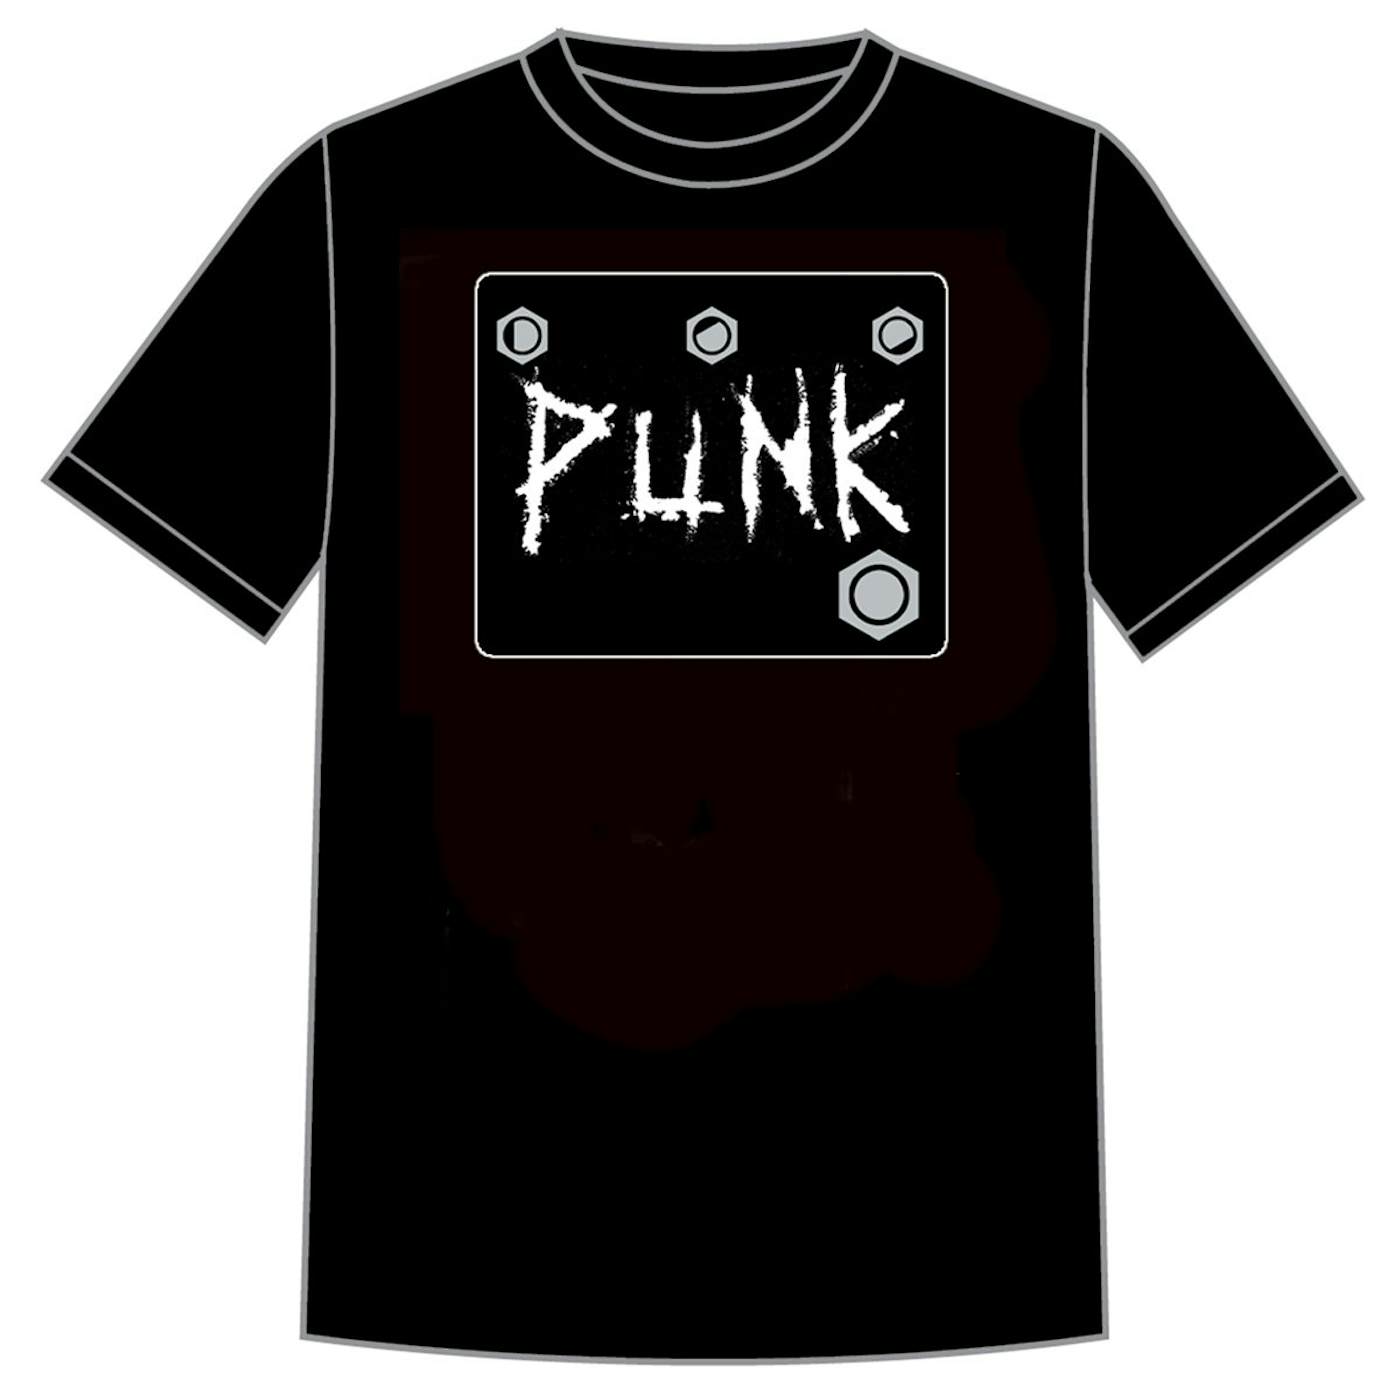 Road Dog Merch "Punk" Pedal shirt